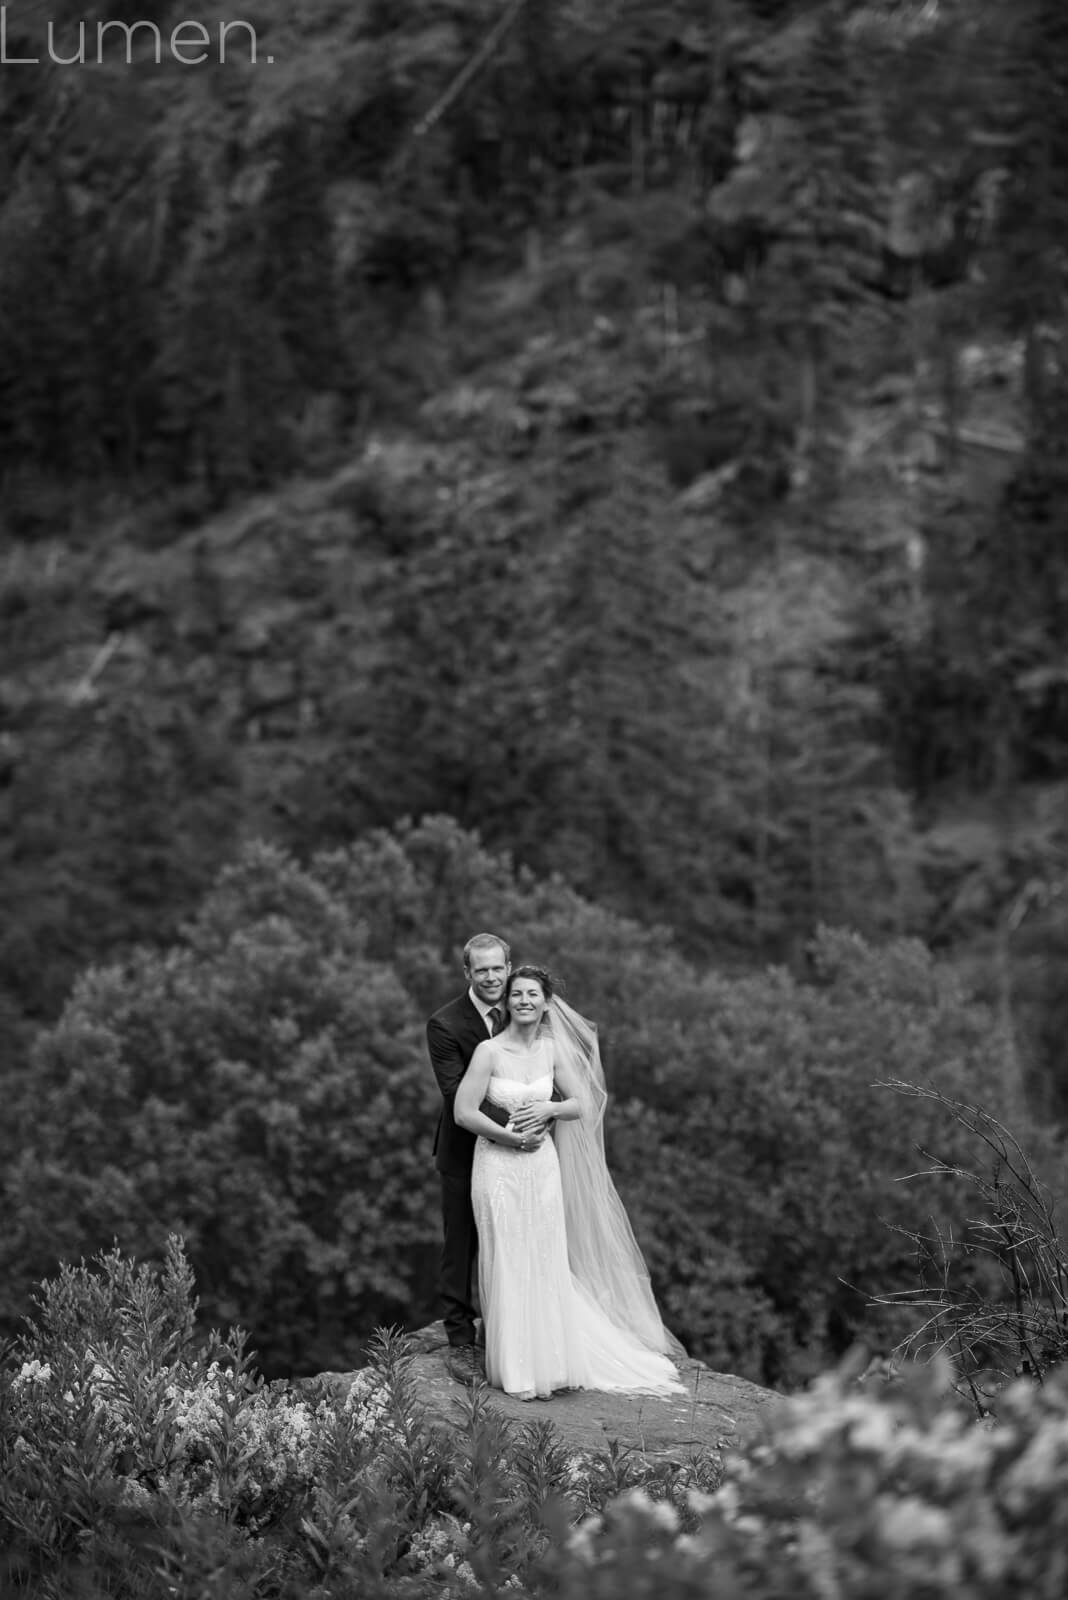 lumen photography, adventurous photography, destination wedding photography minnesota, washington state wedding photography, mountains,leavenworth wedding photography